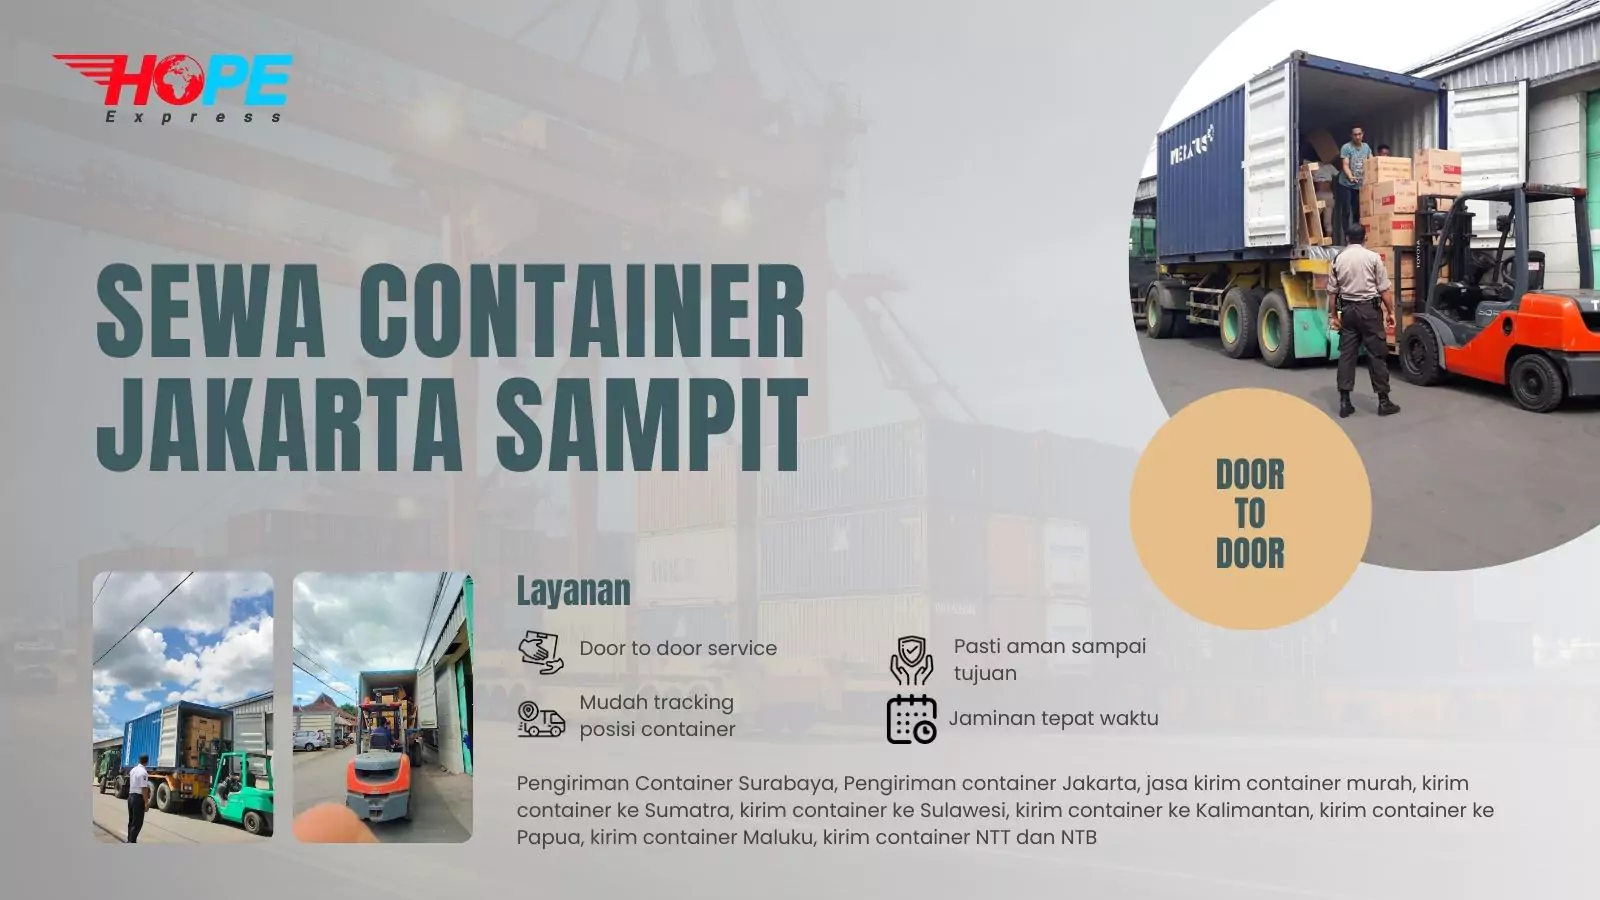 Sewa Container Jakarta Sampit